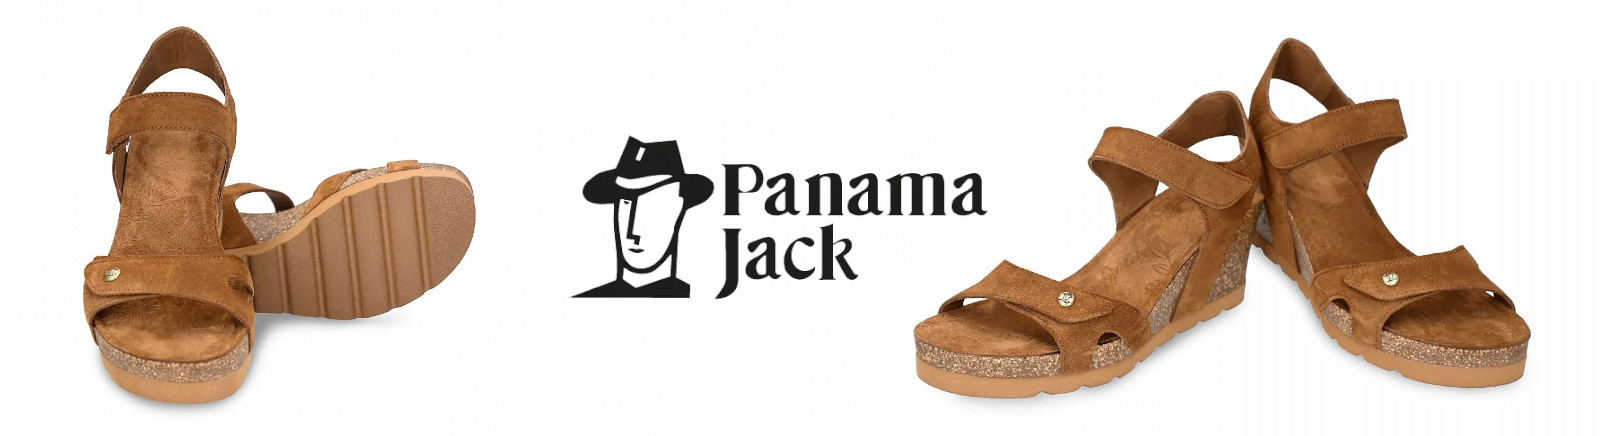 Juppen: Panama Jack Pantoletten für Damen online kaufen online shoppen